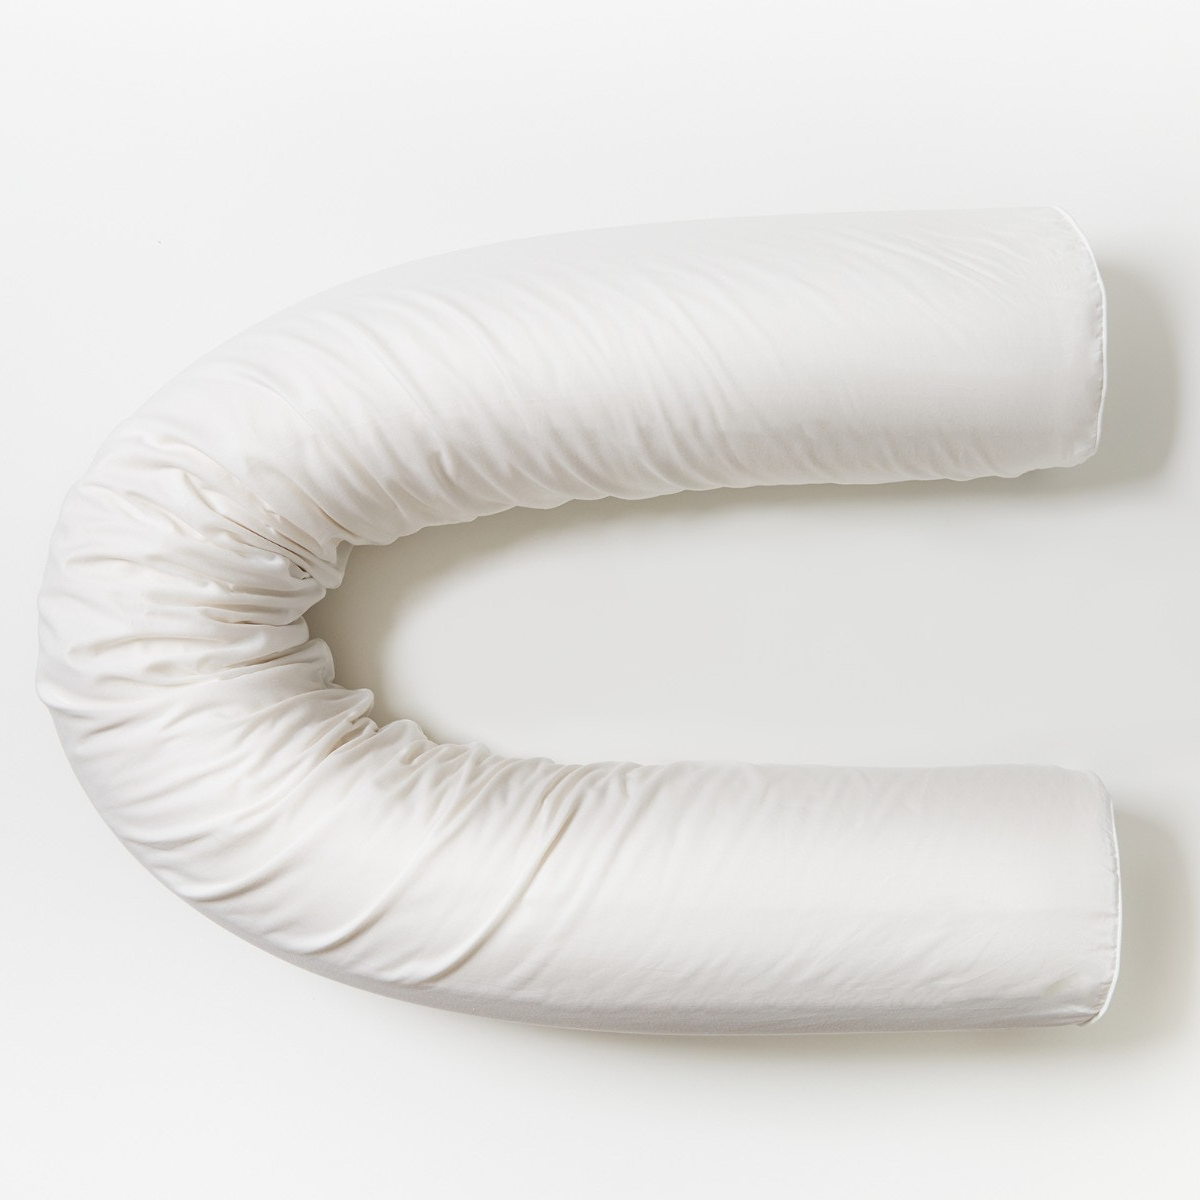 Coyuchi Organic Latex Body Pillow MADE SAFE